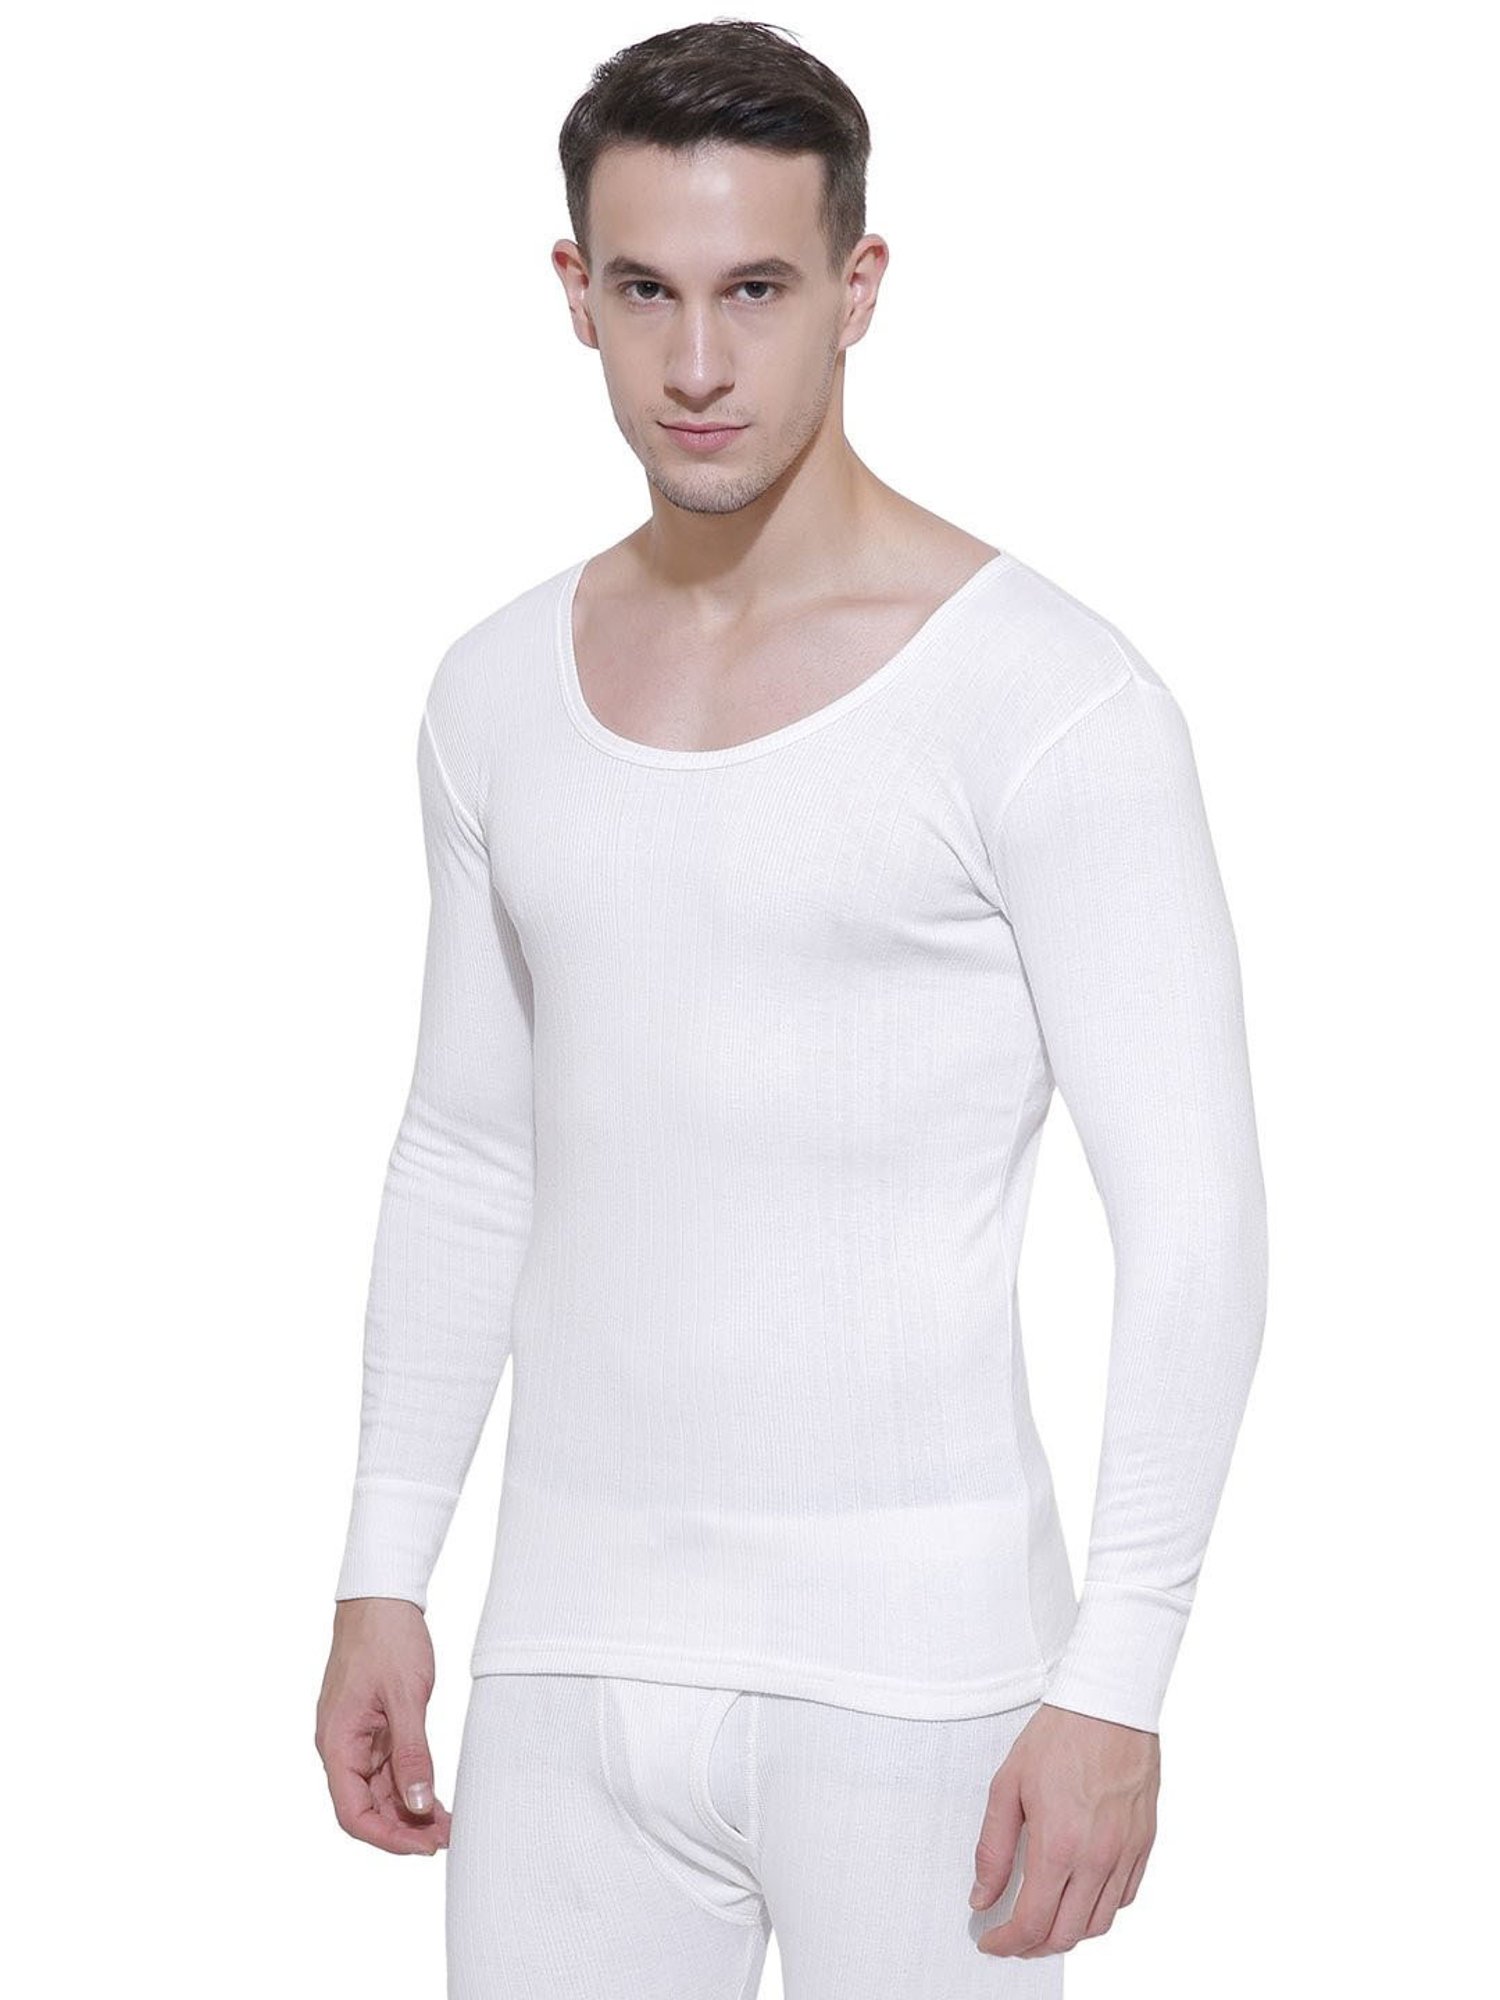 Buy Bodycare White Regular Fit Thermal Top for Men Online @ Tata CLiQ